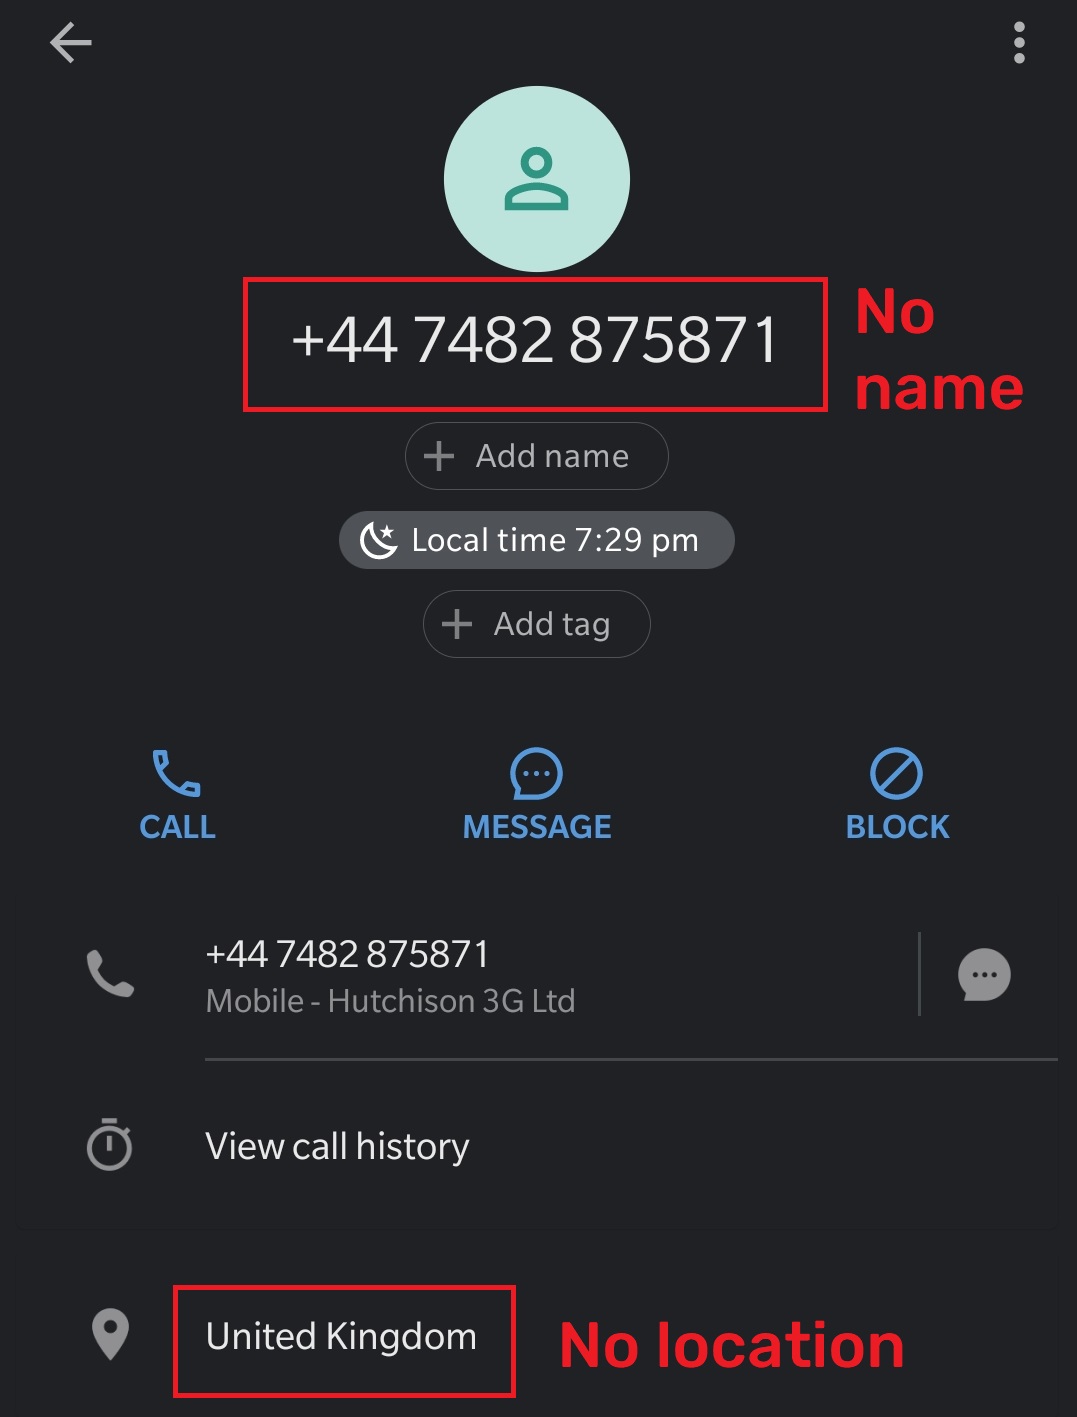 xehia trading ltd scam fake phone number